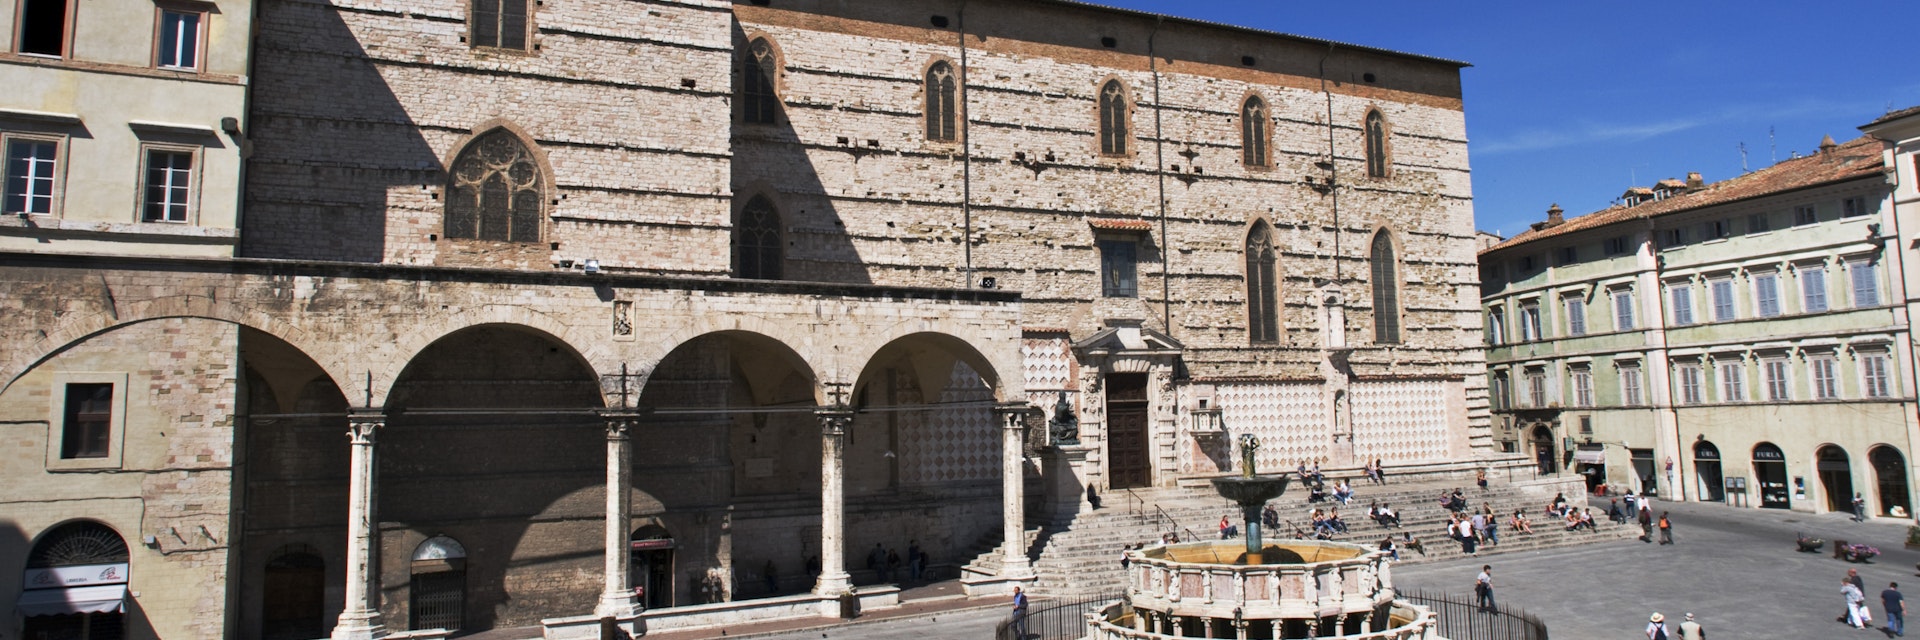 Plazza 4 november;Perugia;Umbria;Italia